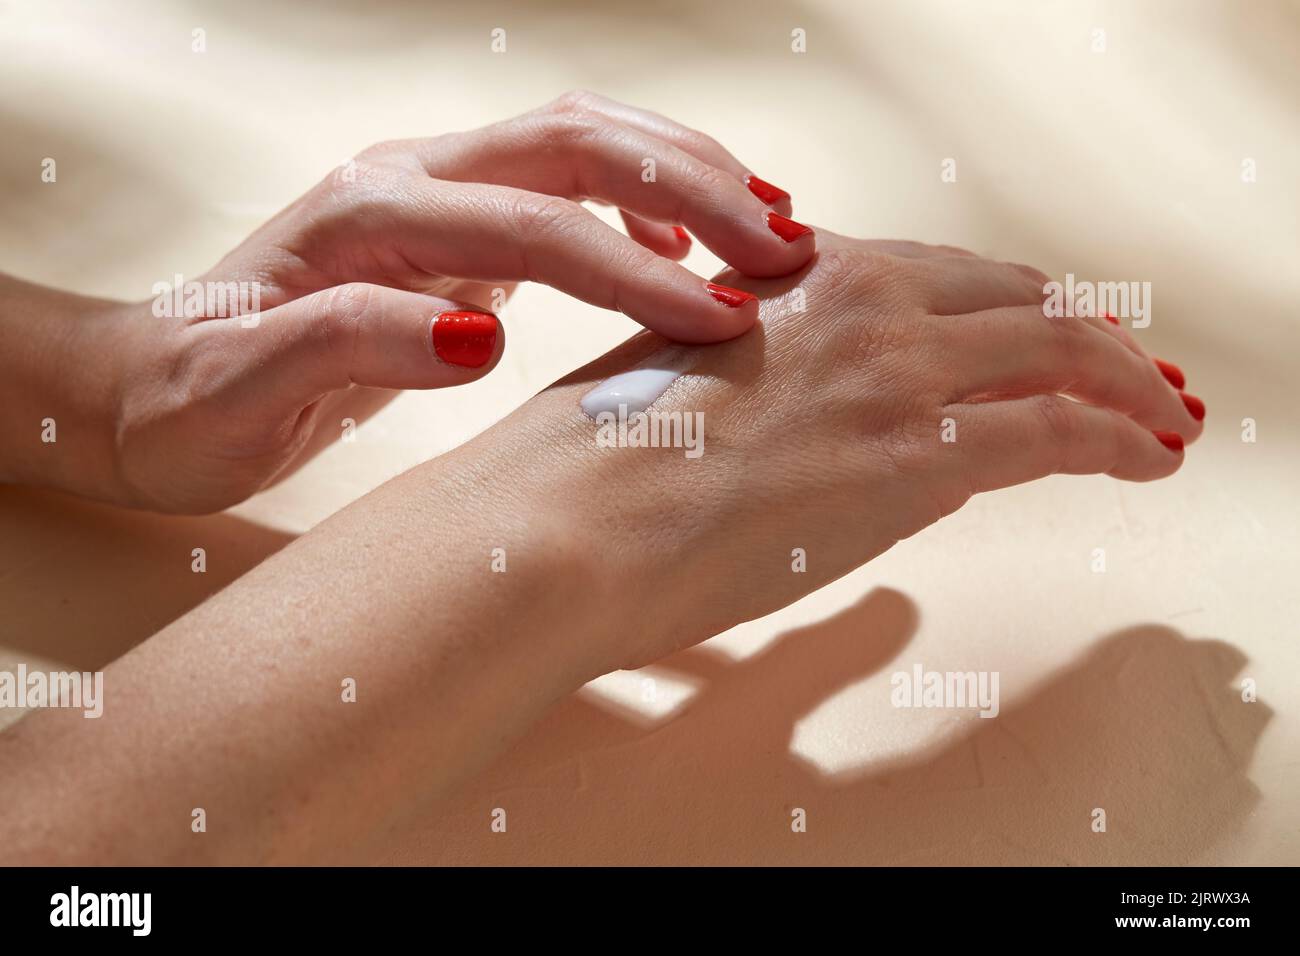 female hands applying moisturizer to skin Stock Photo